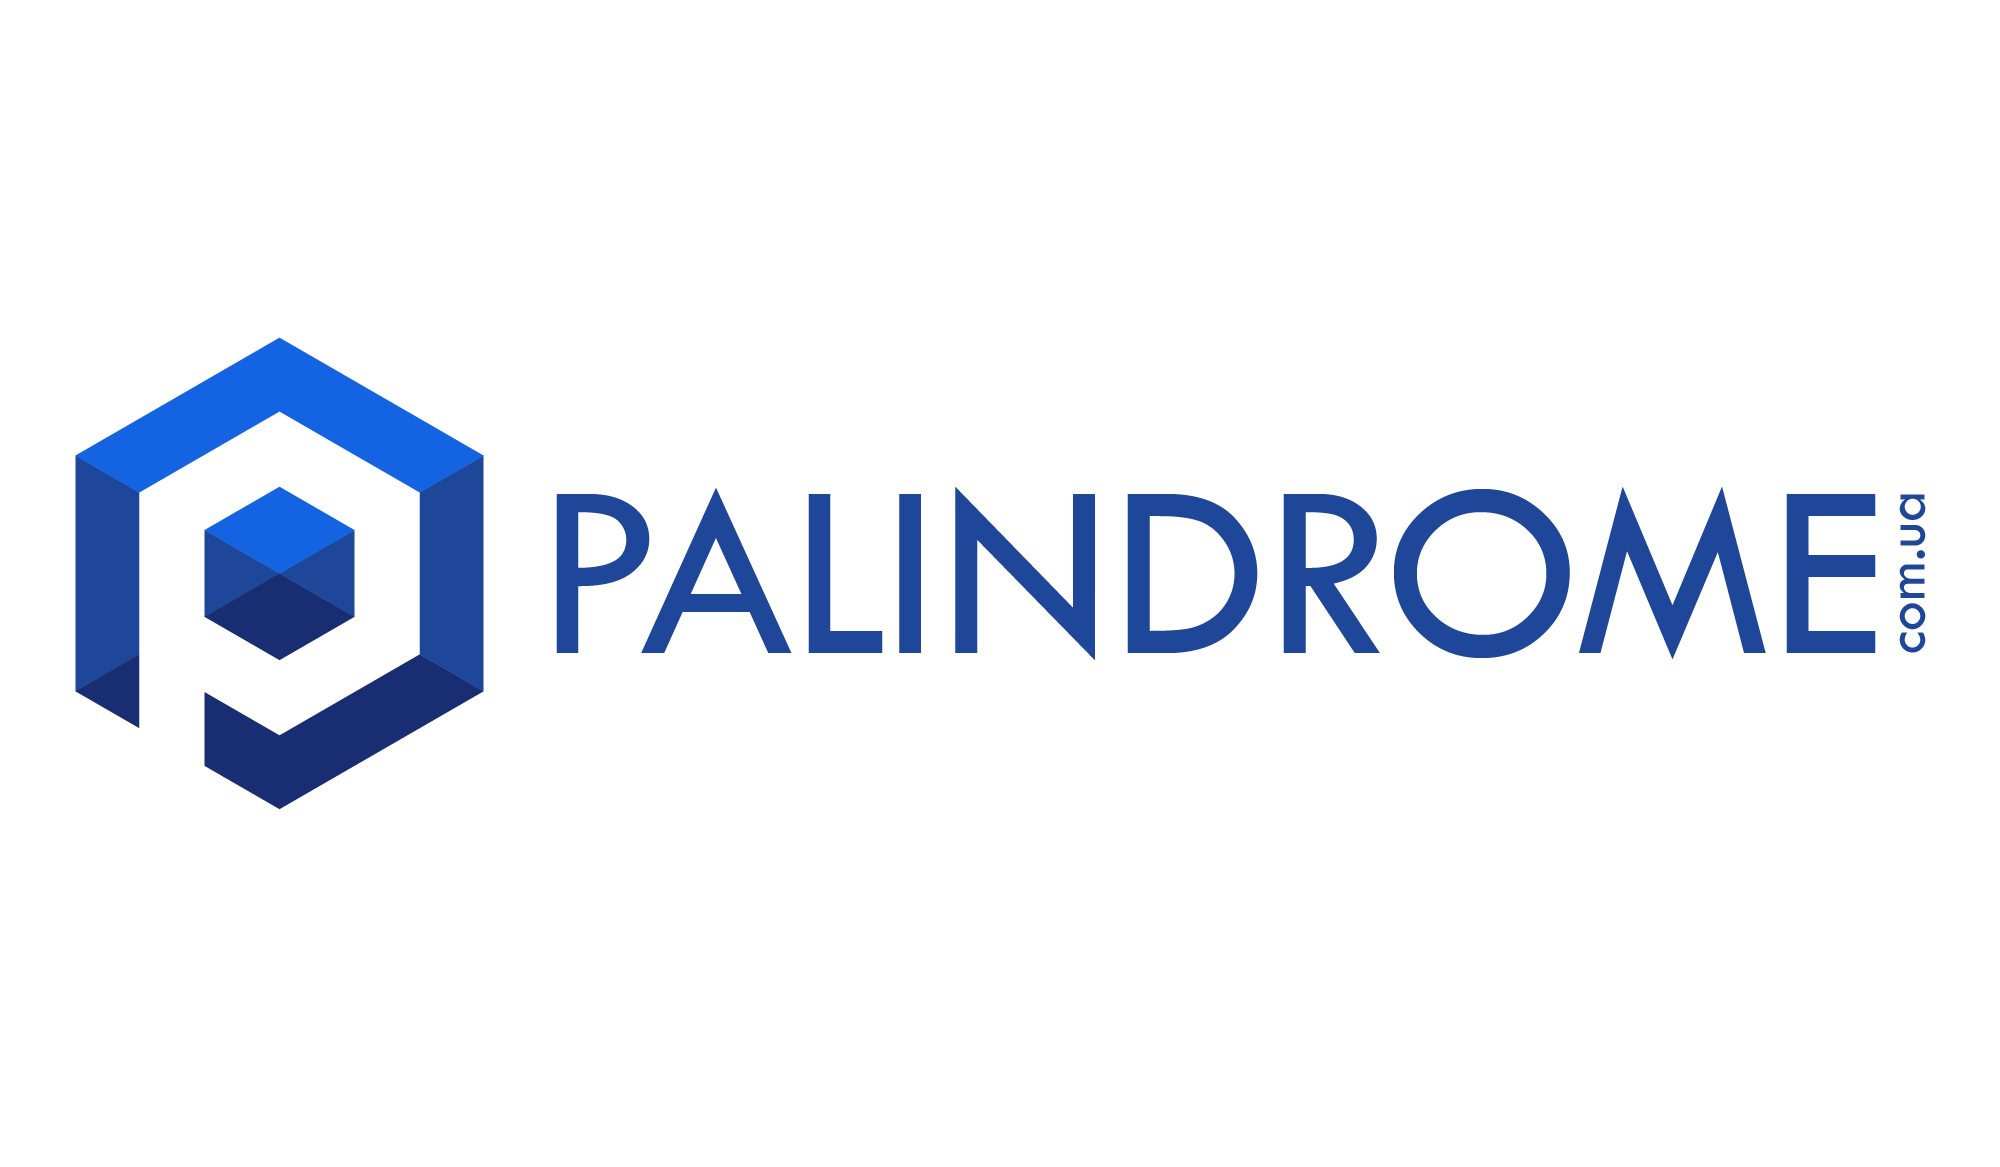 Palindrome logo 01